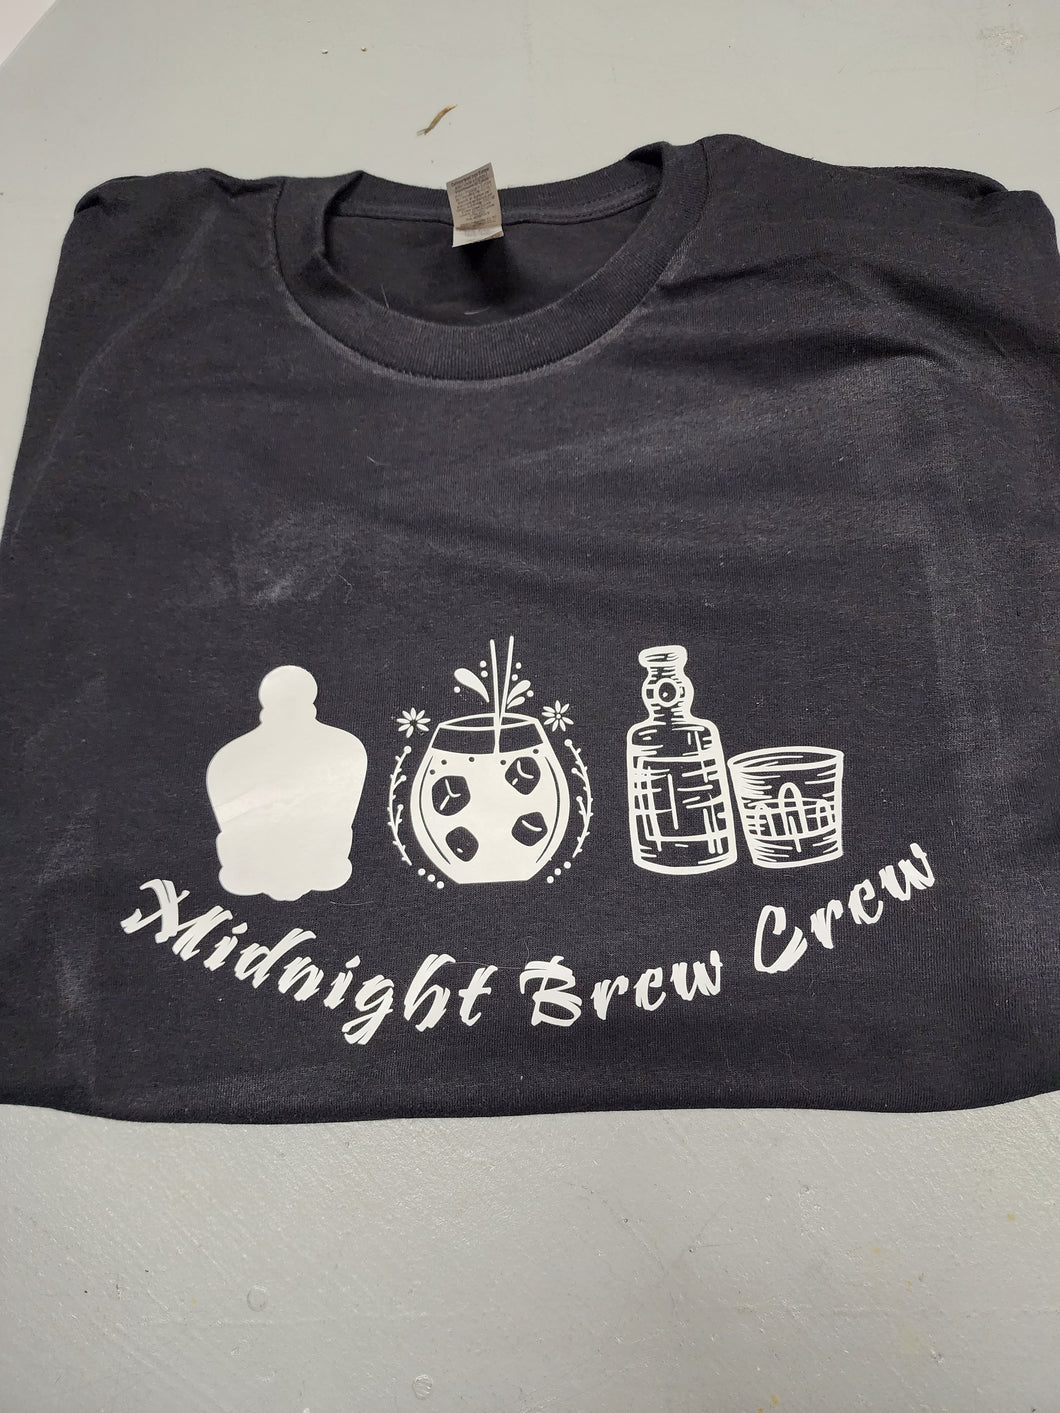 Midnight Brew Crew tshirt